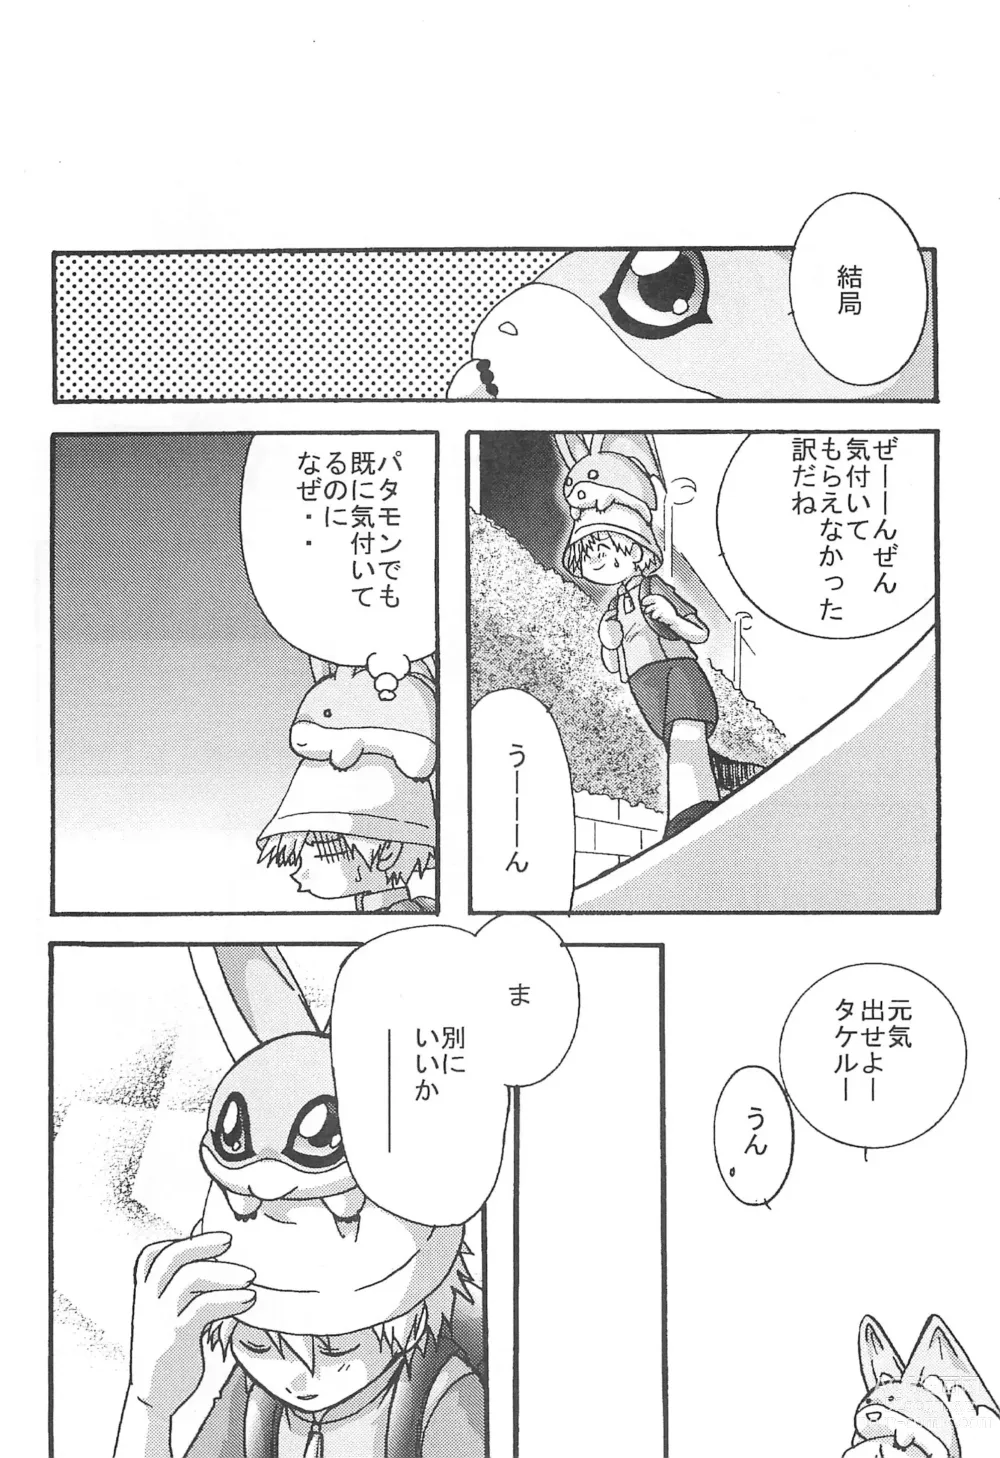 Page 40 of doujinshi SUBTLE RELATION